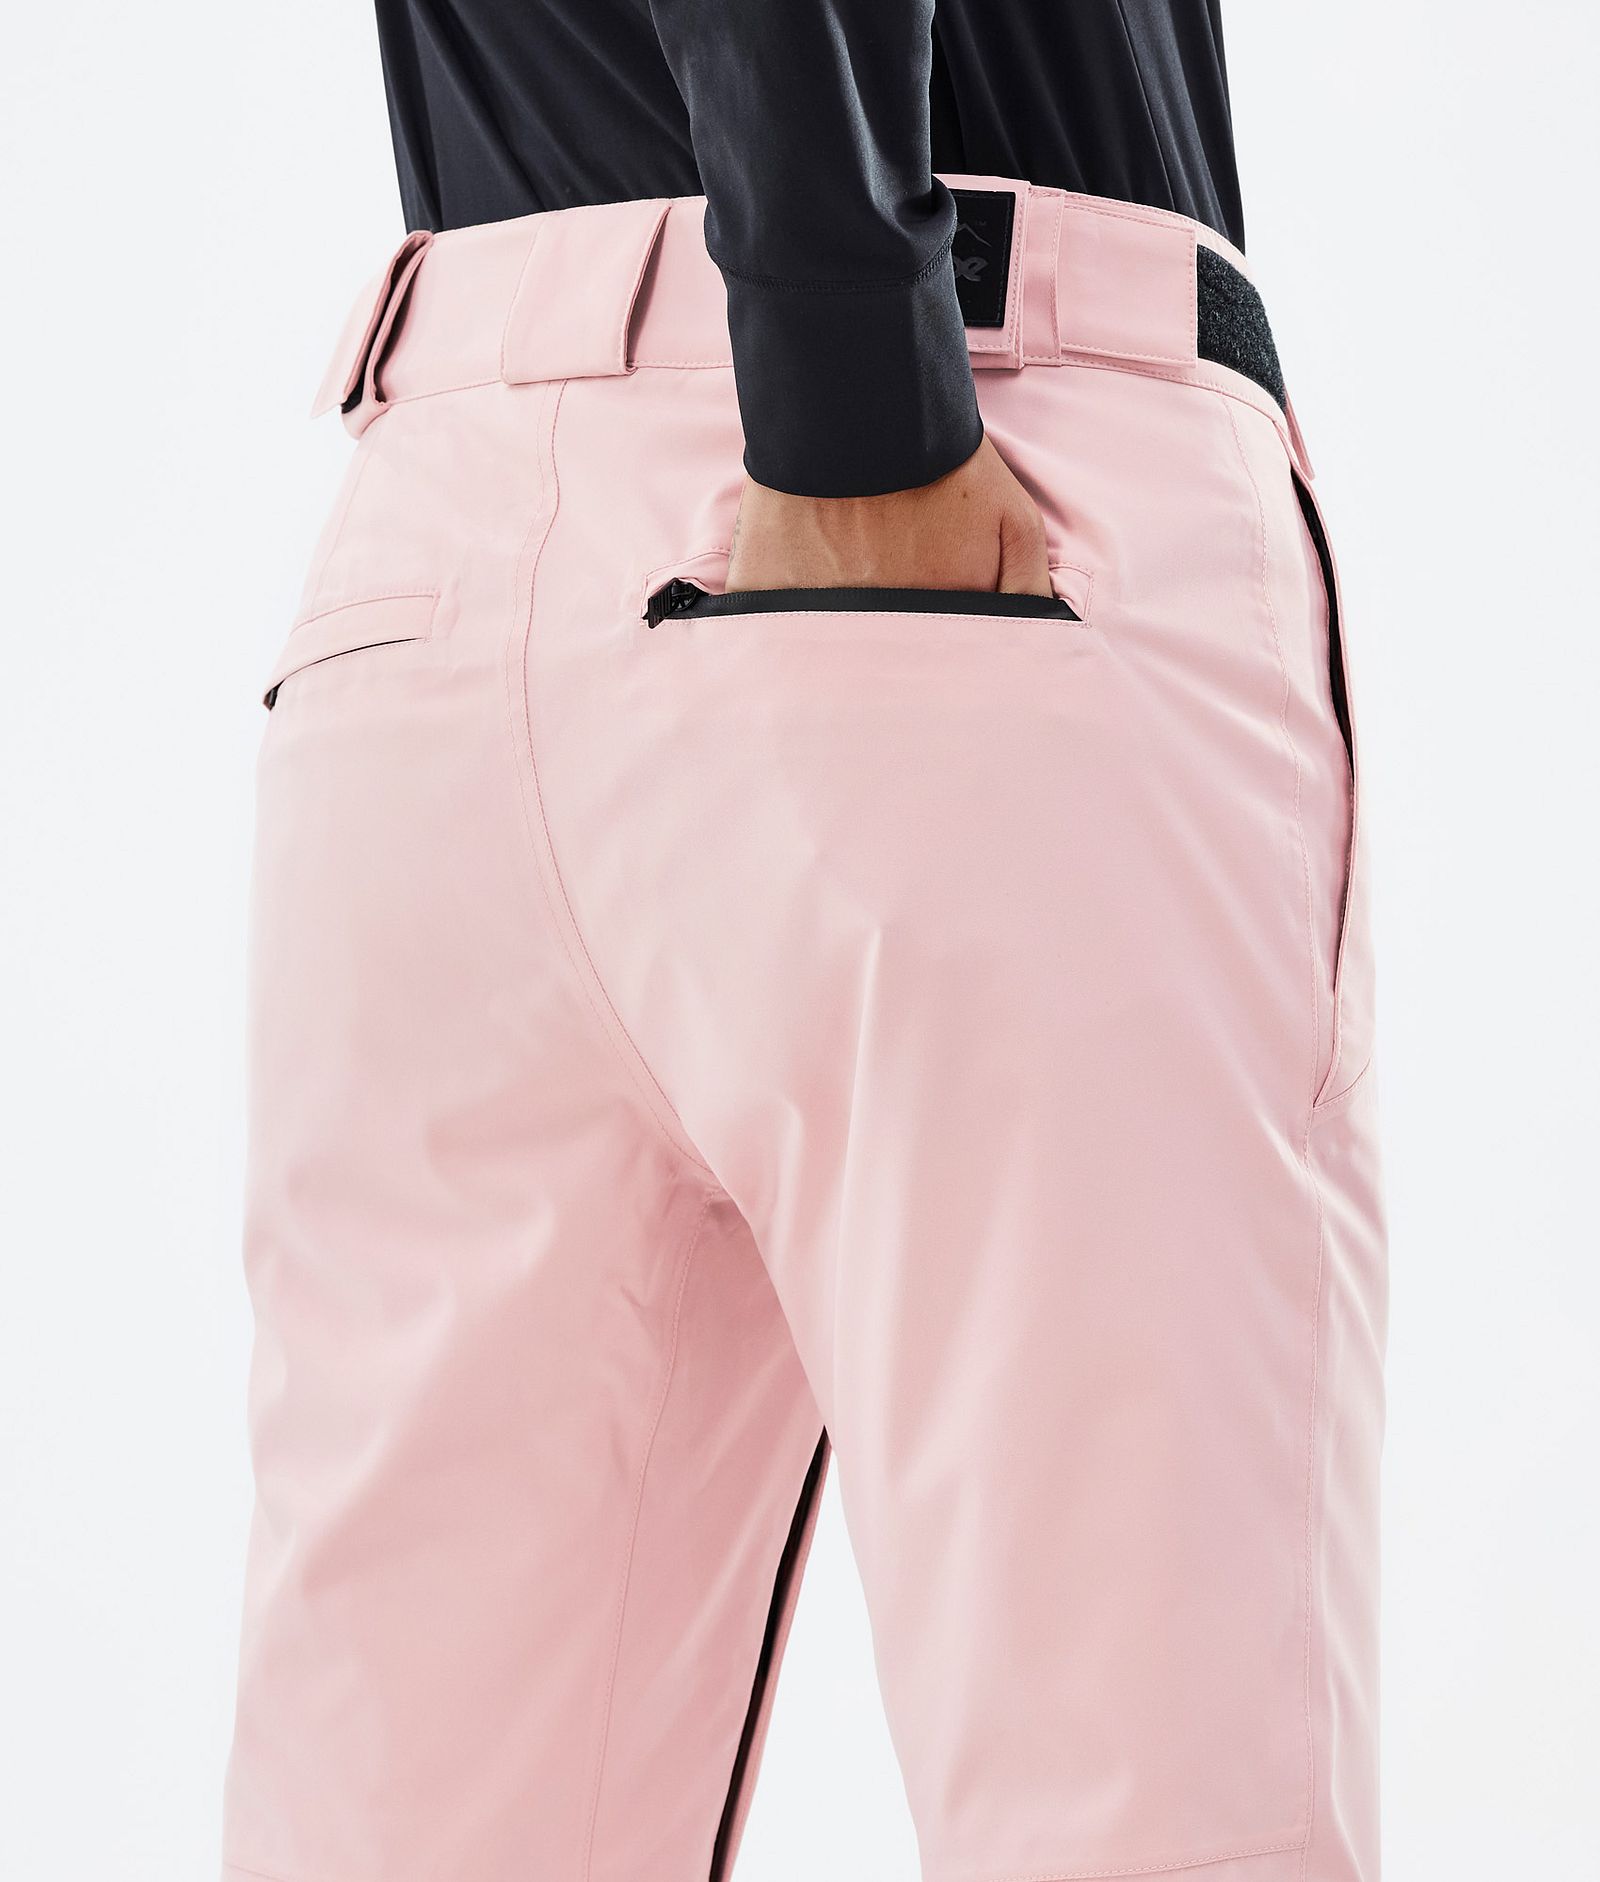 Dope Con W 2022 Skihose Damen Soft Pink - Rosa | Outdoorhosen